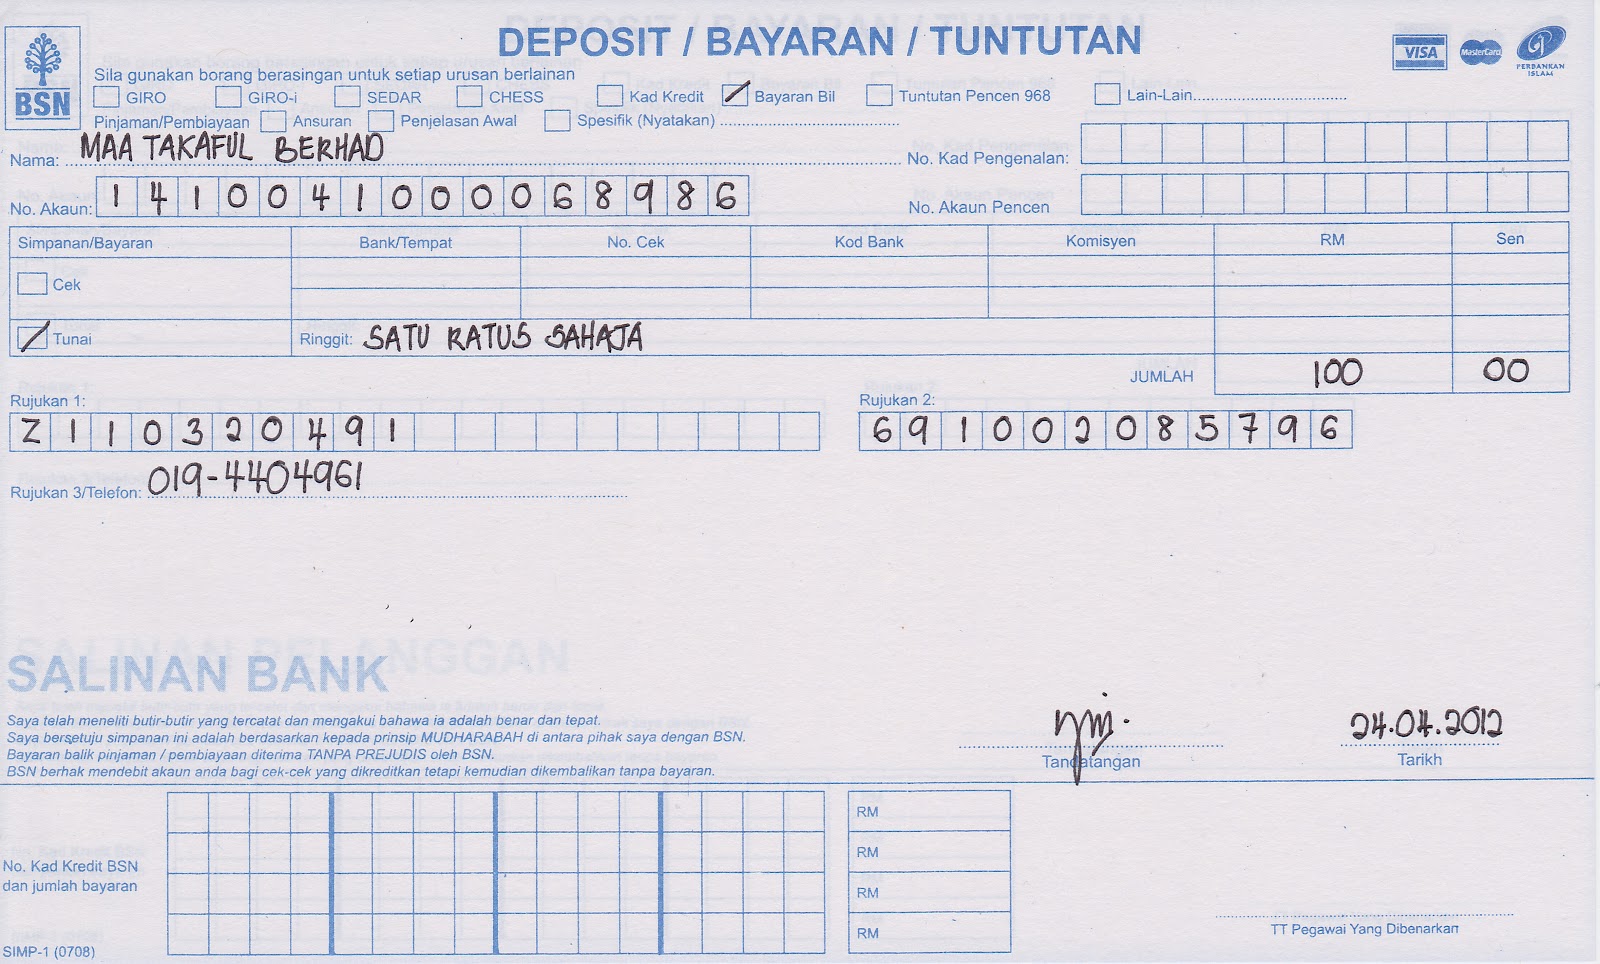 Maa Takaful Berhad Agensi Ikhwan Bank Simpanan Nasional Over The Counter Method